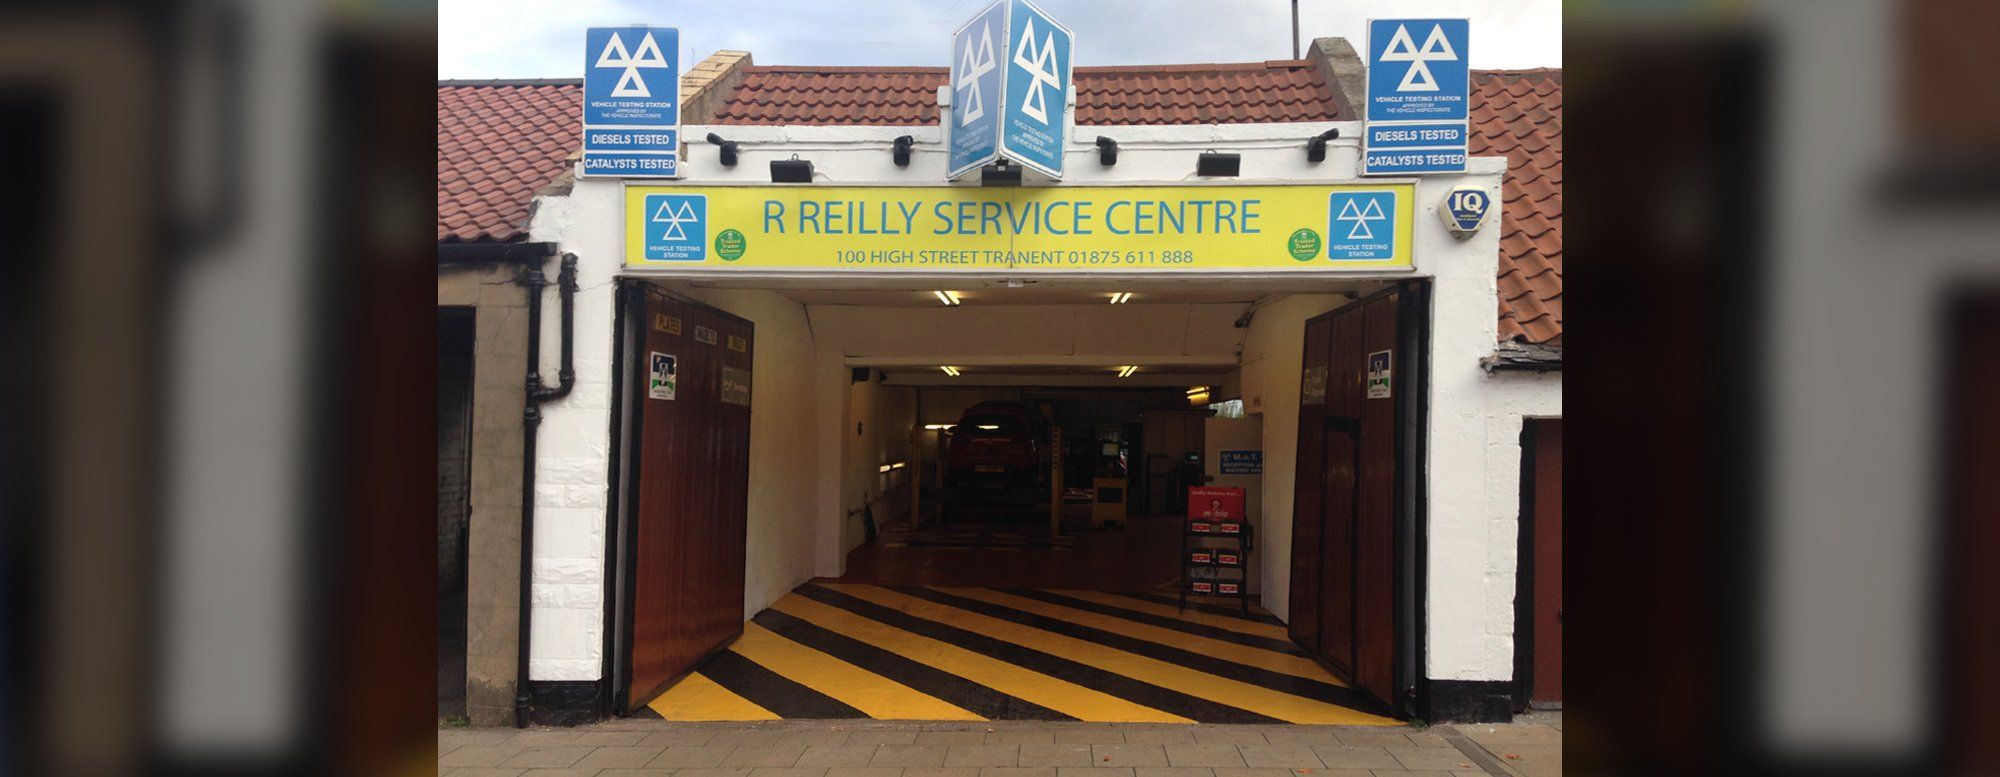 Reilly Service Centre garage enterance